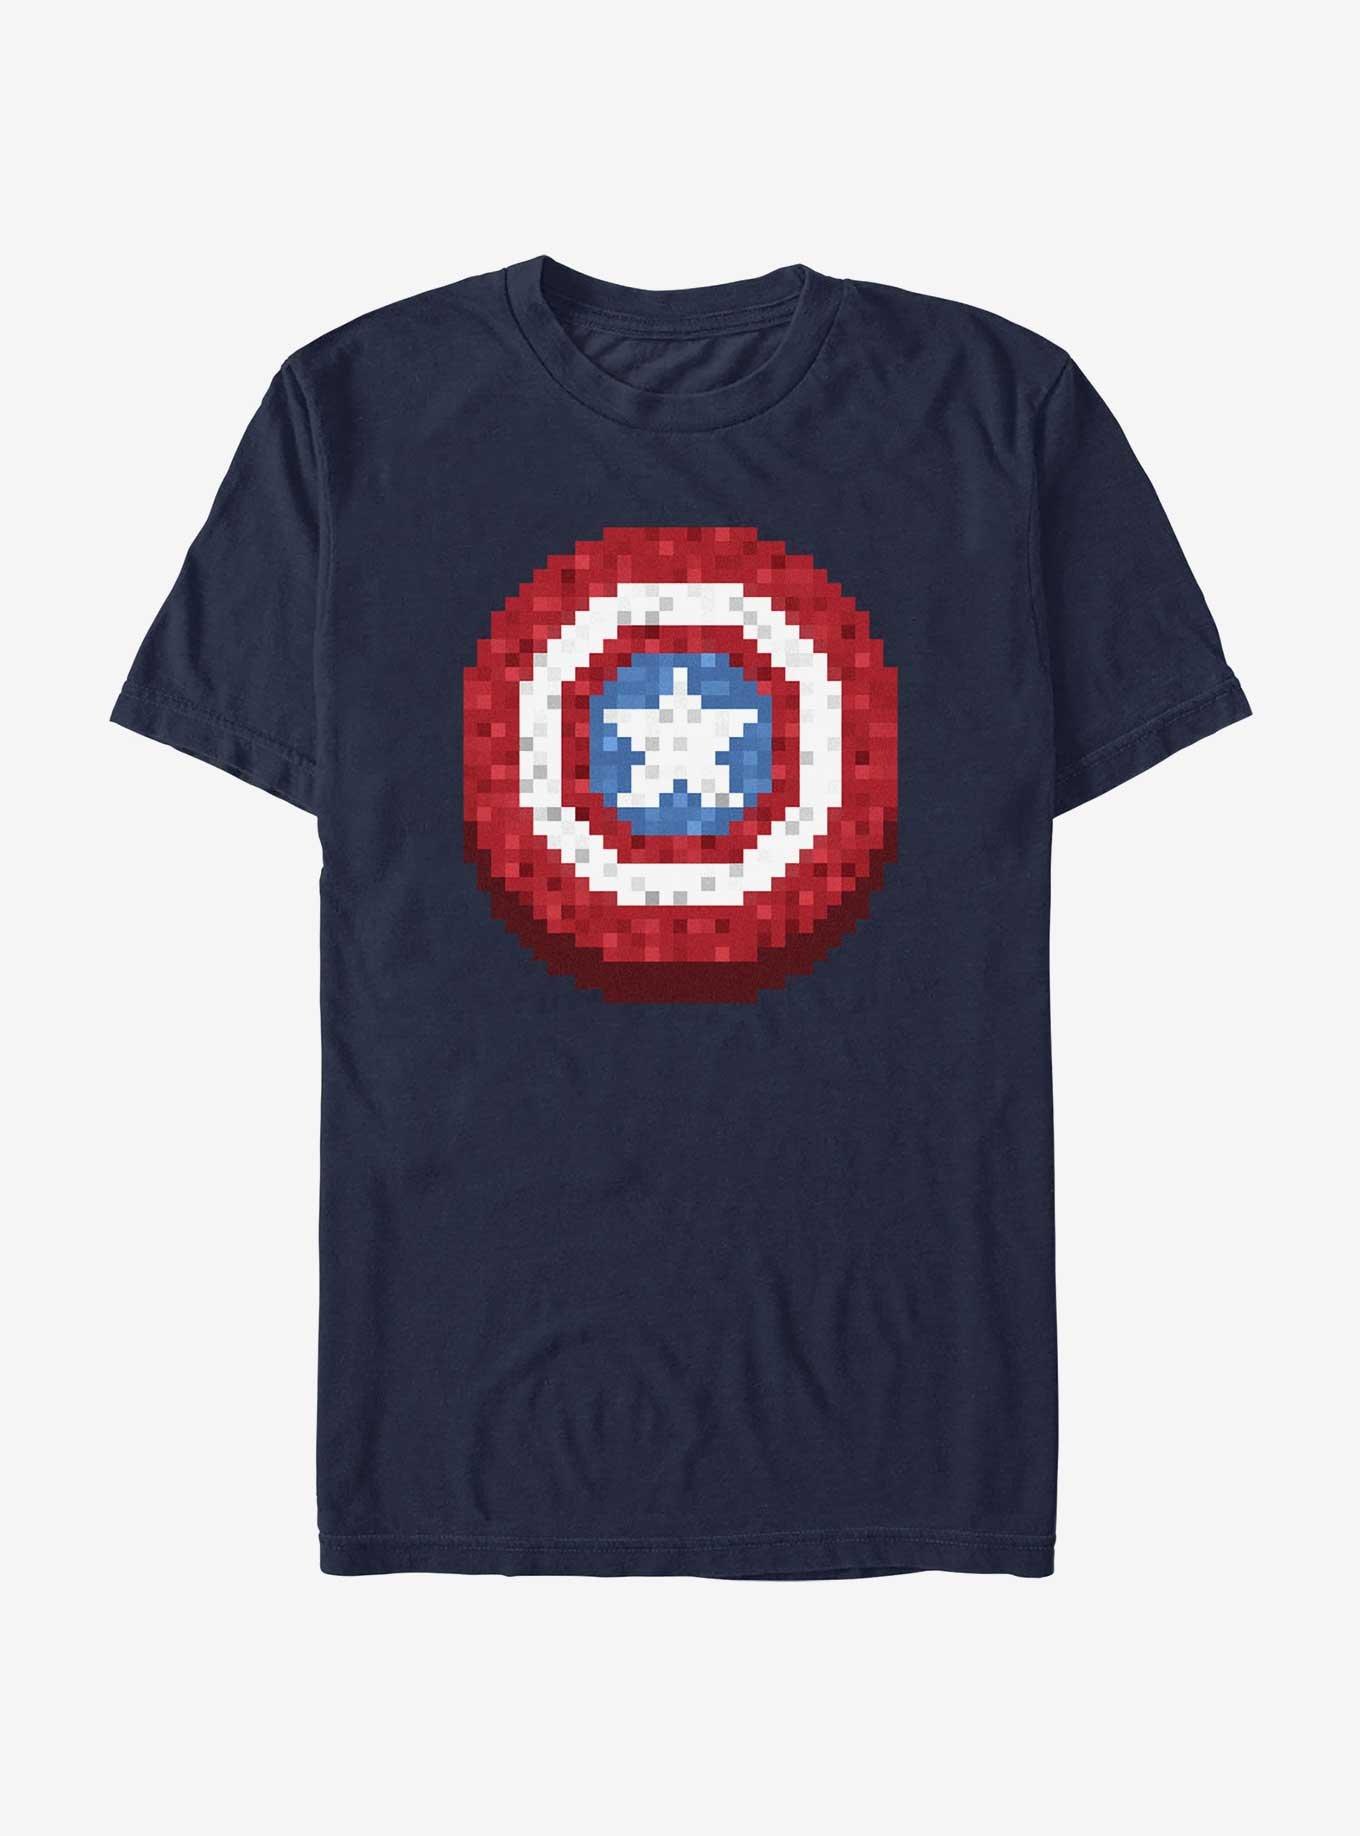 Marvel Captain America Pixelated Shield T-Shirt, NAVY, hi-res